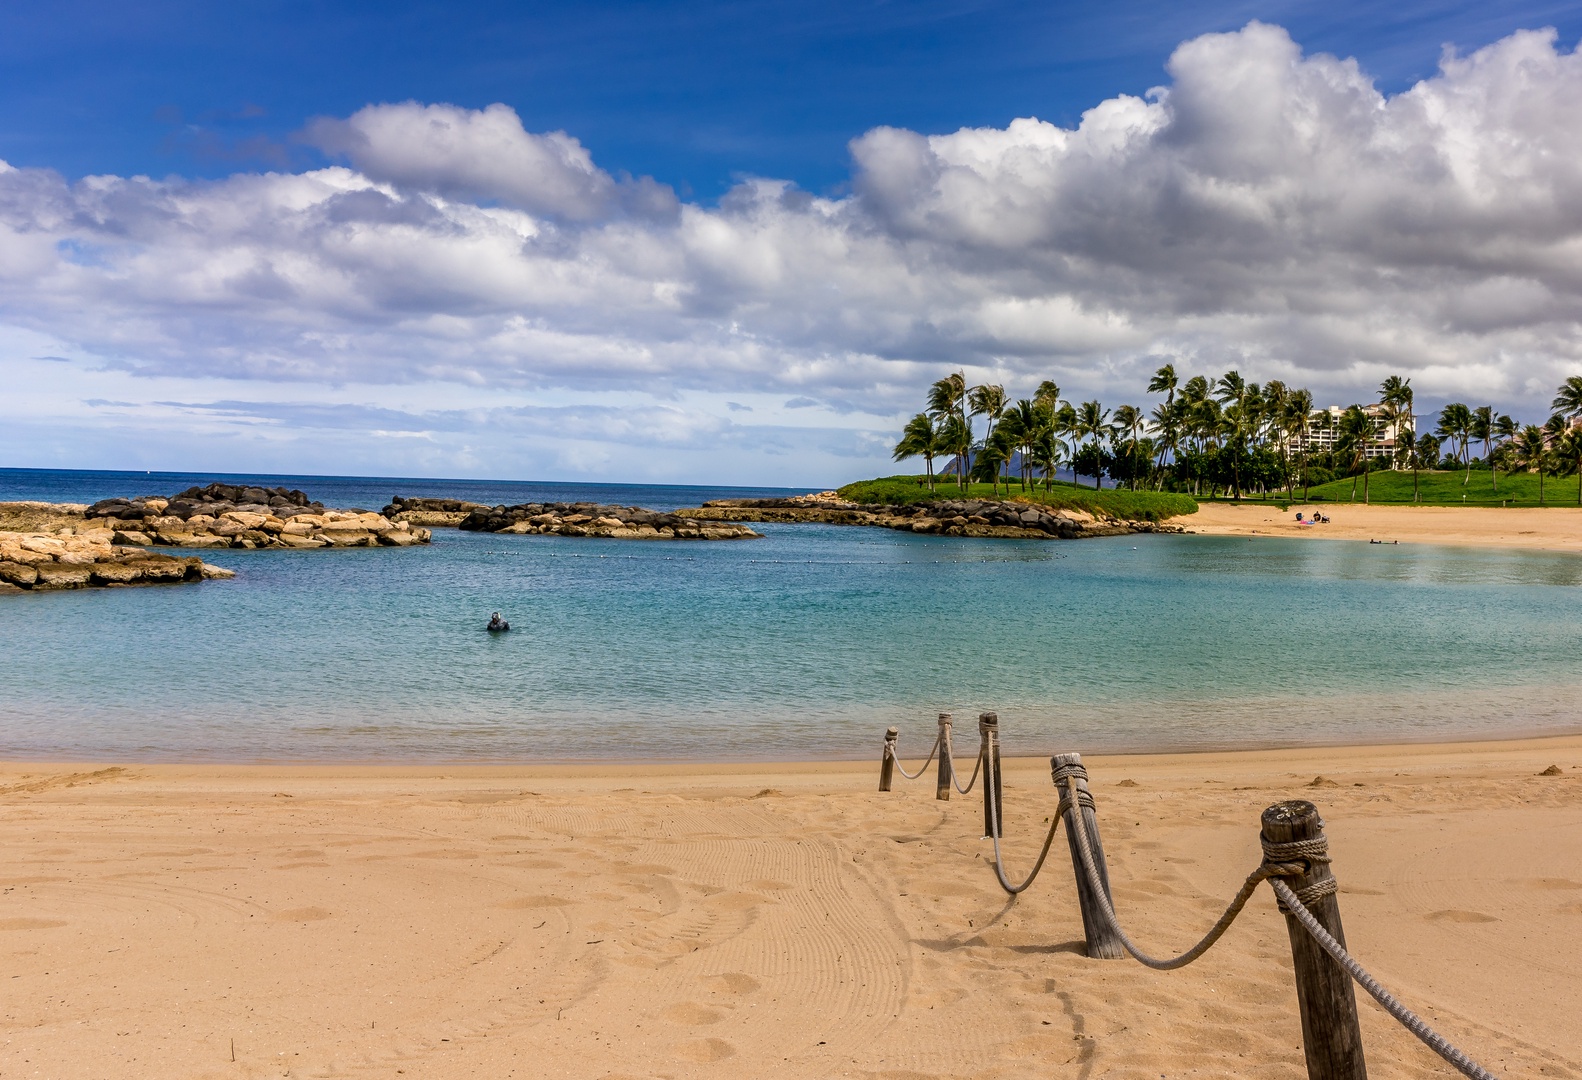 Kapolei Vacation Rentals, Fairways at Ko Olina 20G - Take a stroll along the peaceful shores in paradise.